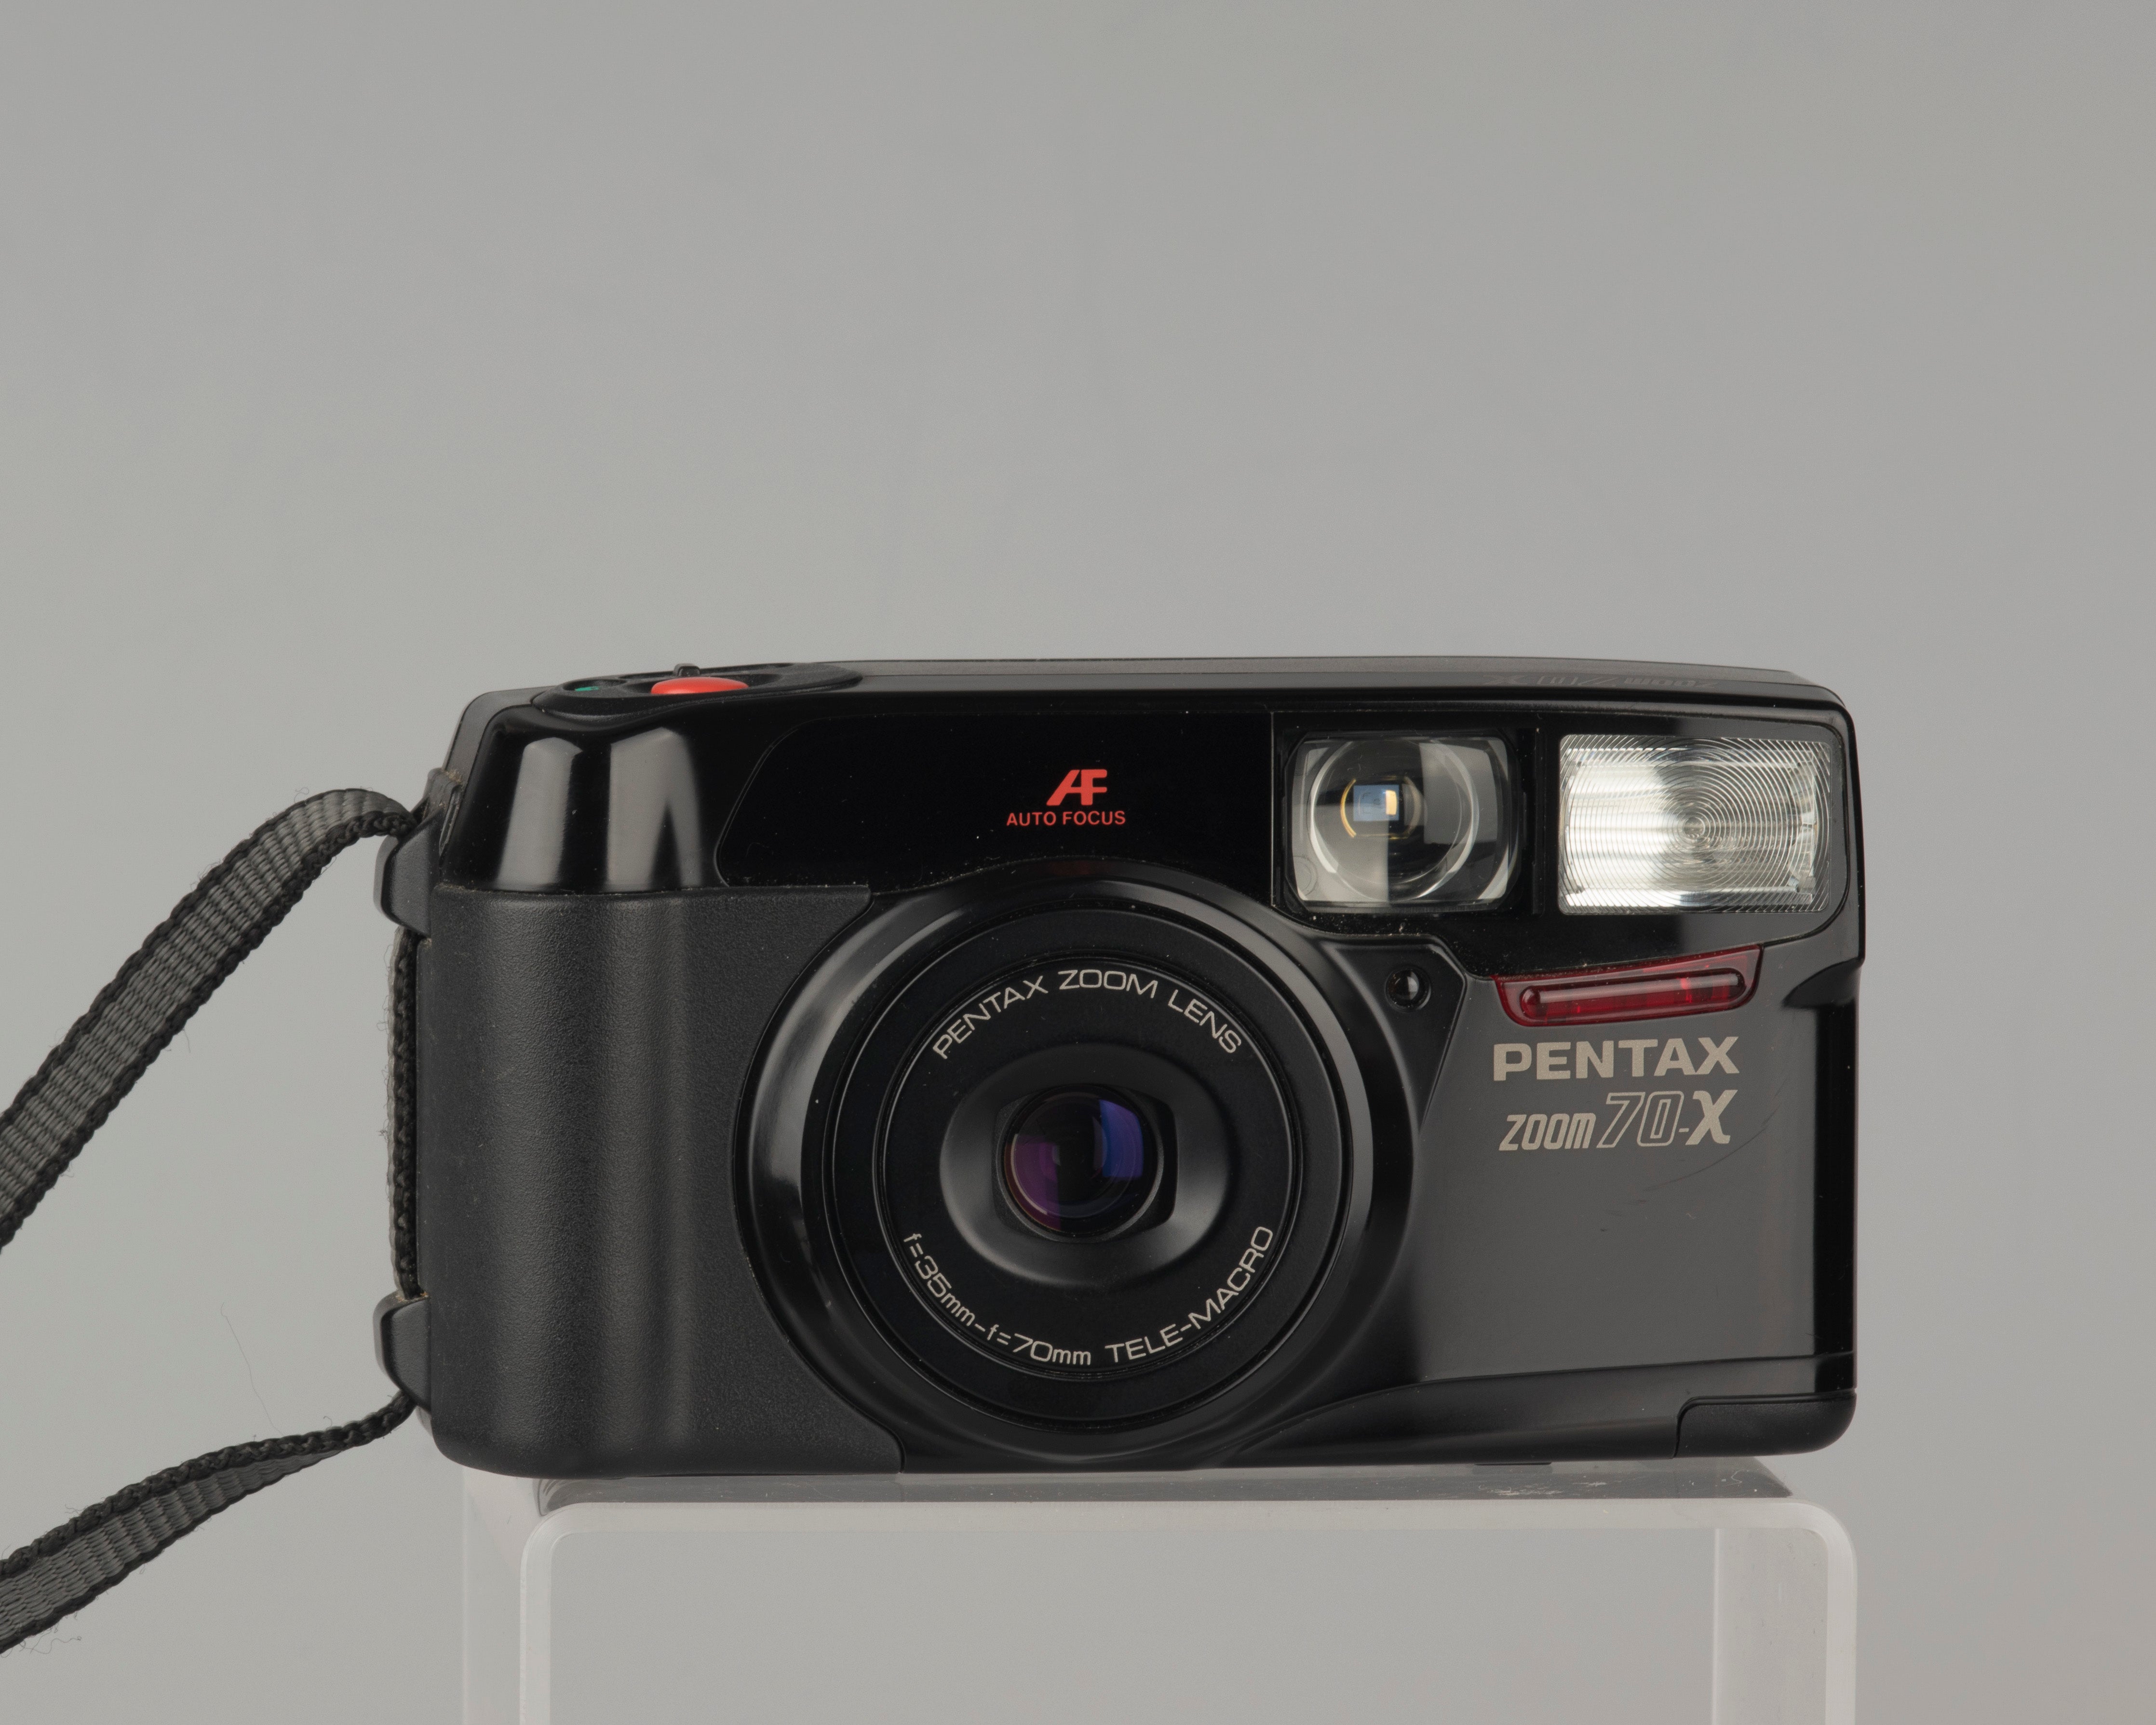 Pentax Zoom 70-X 35mm camera – New Wave Pool